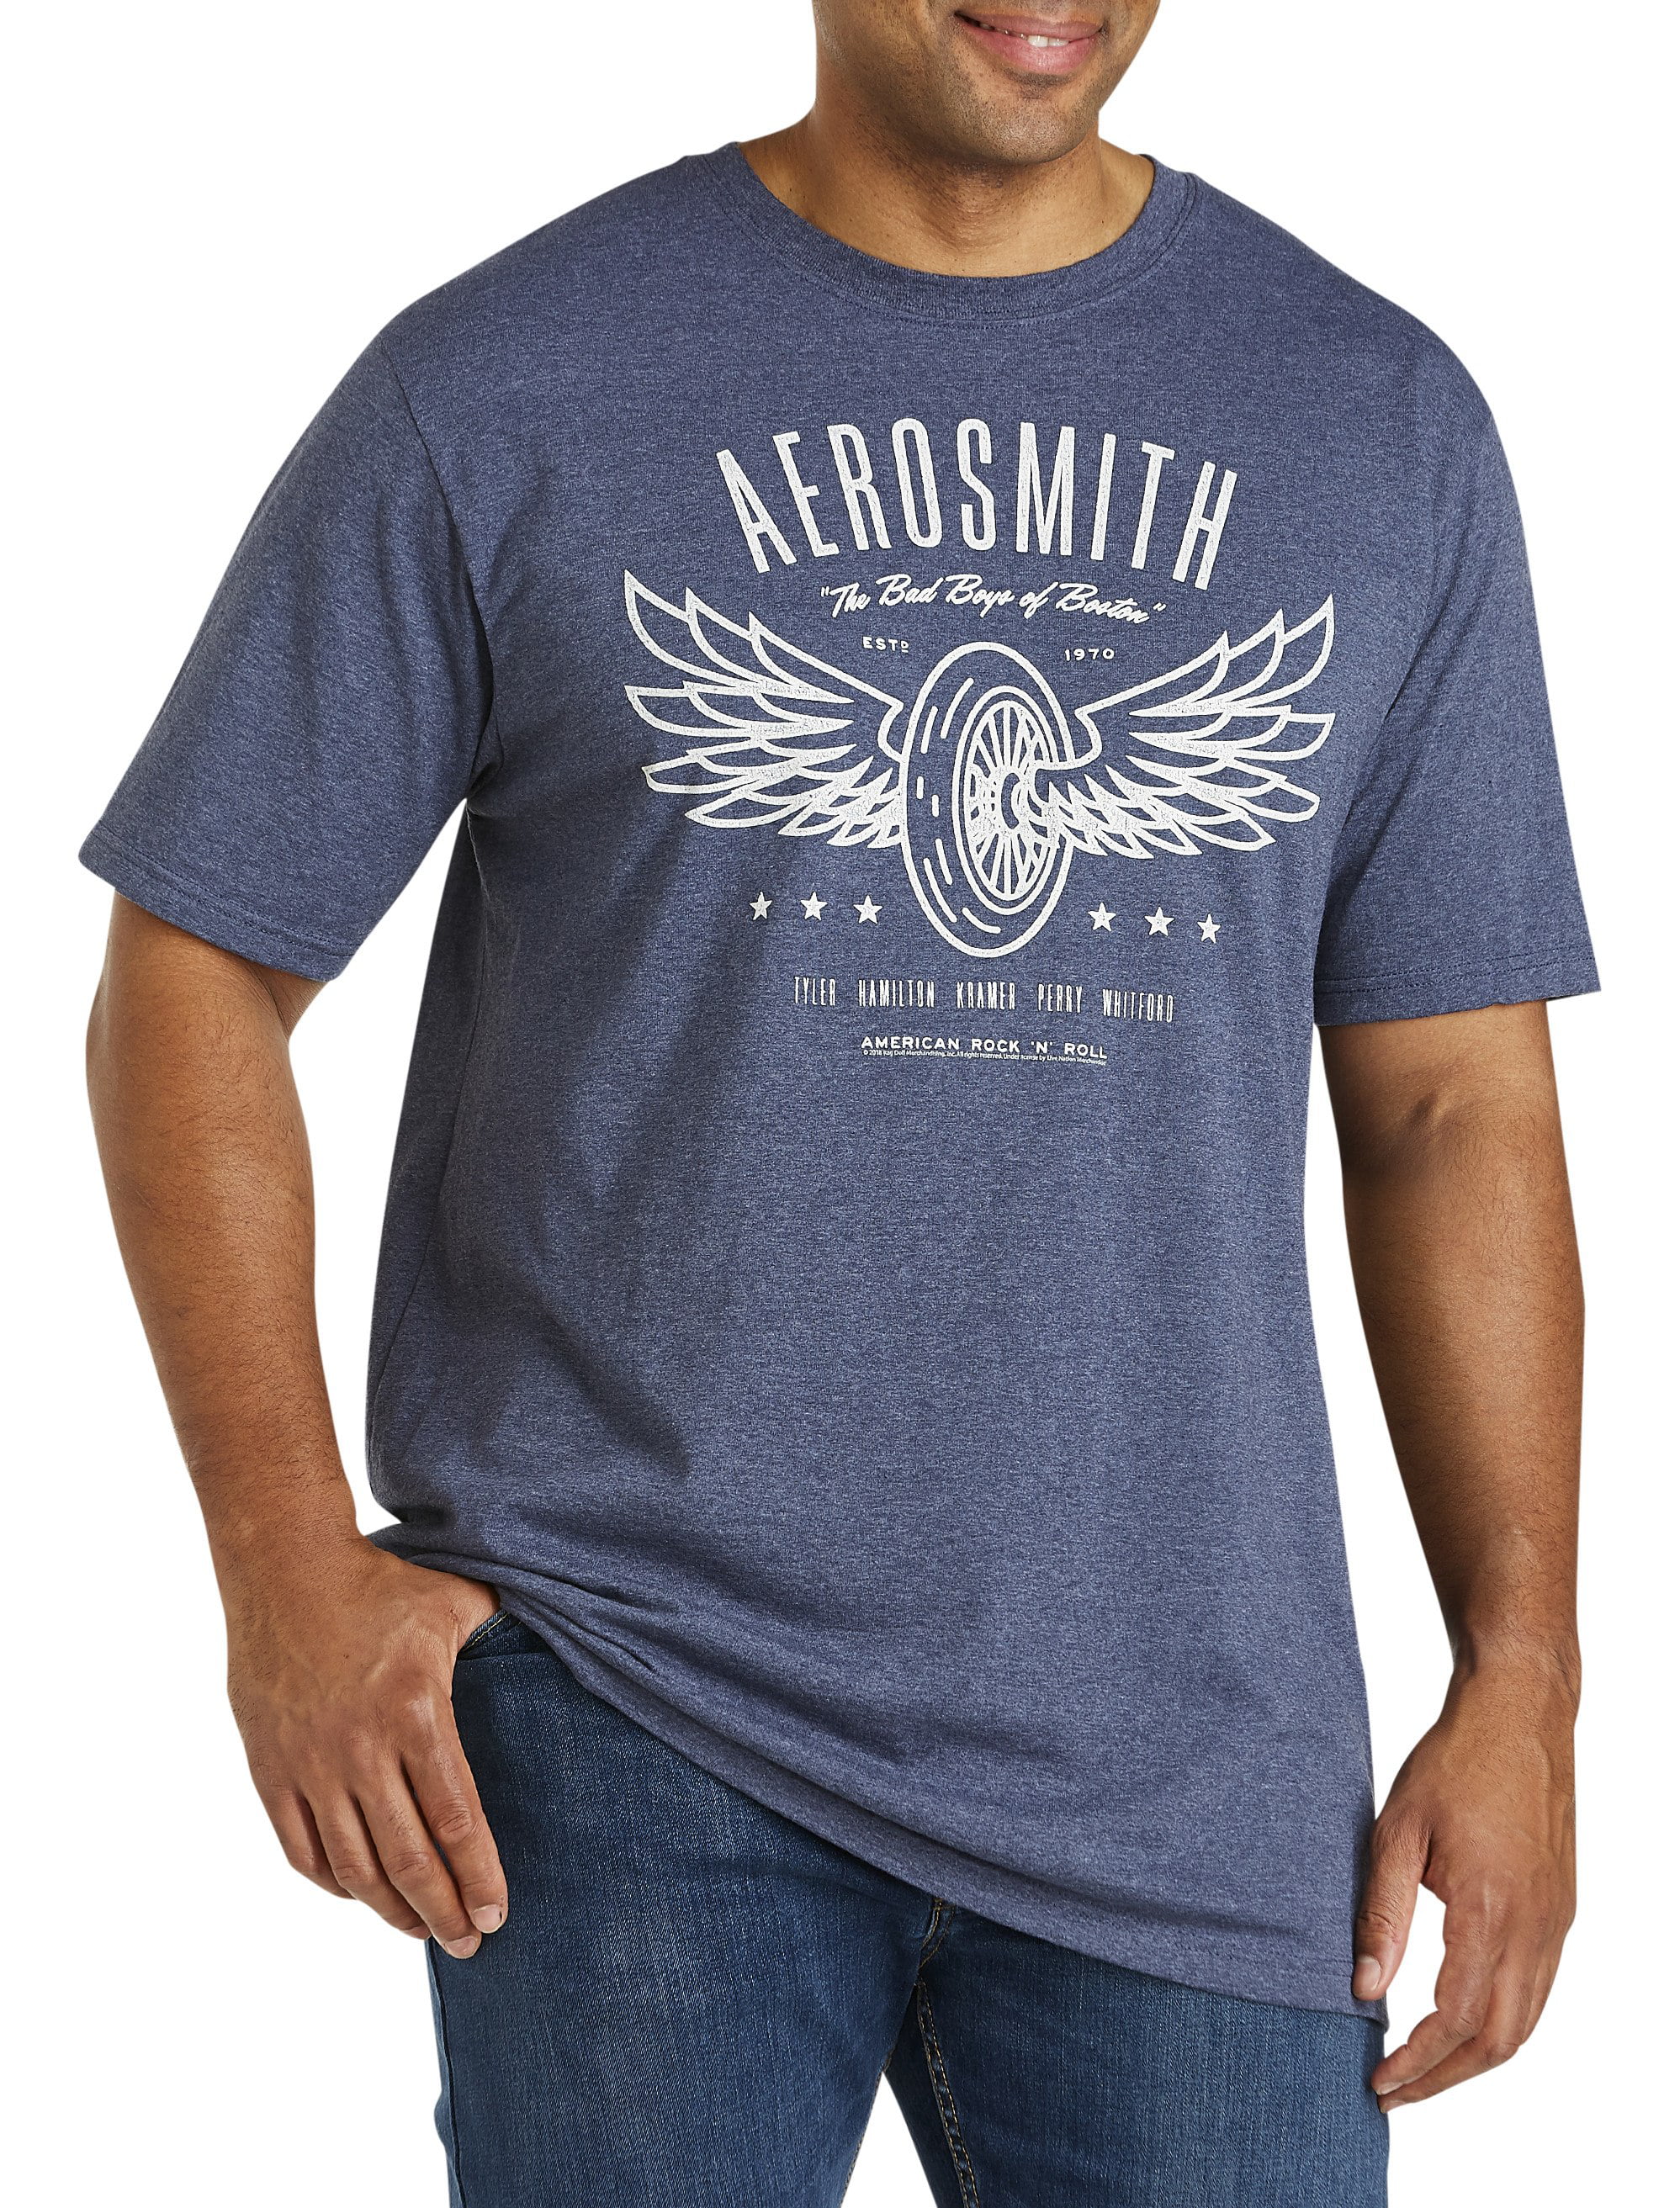 High Quality Tee Aerosmith Rock n' Roll T-Shirt Men's Women's All Sizes